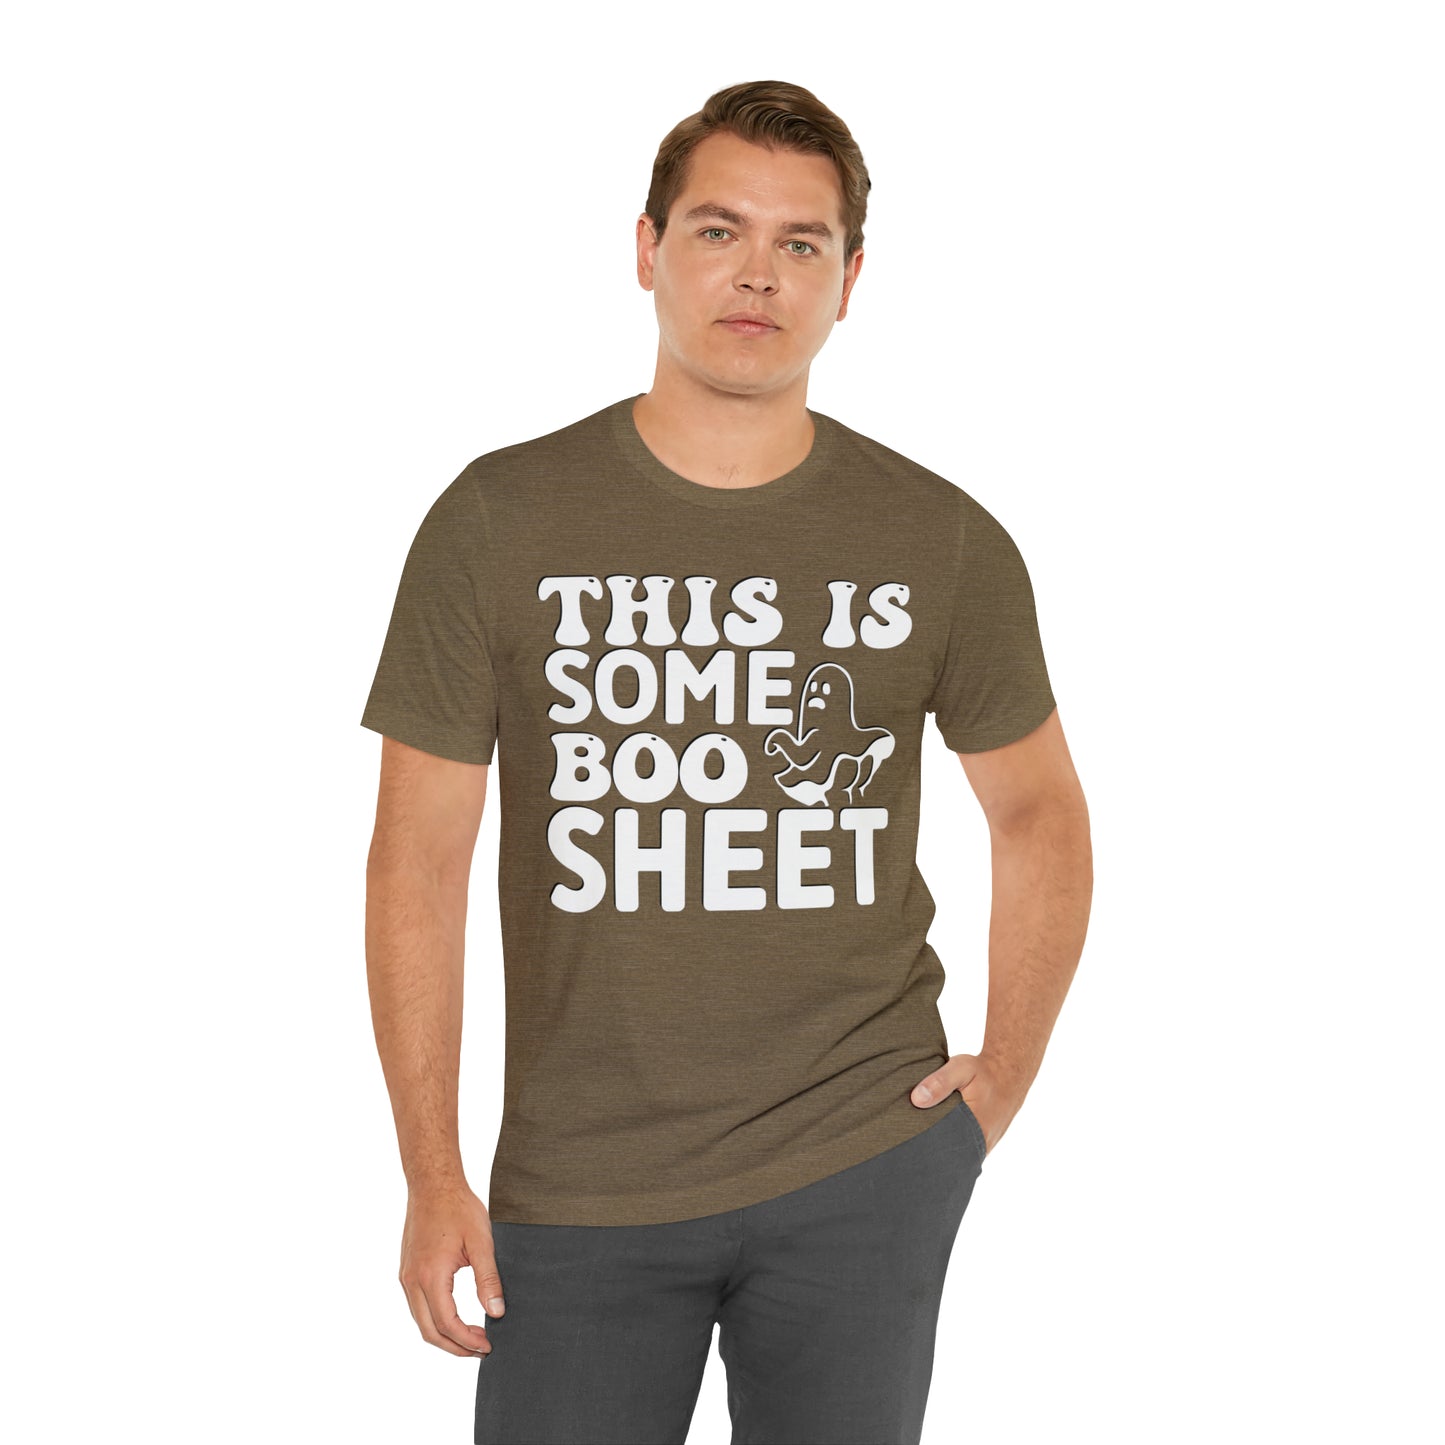 This Is Some Boo Sheet shirt, Boo Sheet Shirt, Spooky Season Tee, Retro Halloween Kids Shirt, Funny Halloween Ghost Shirt, T655